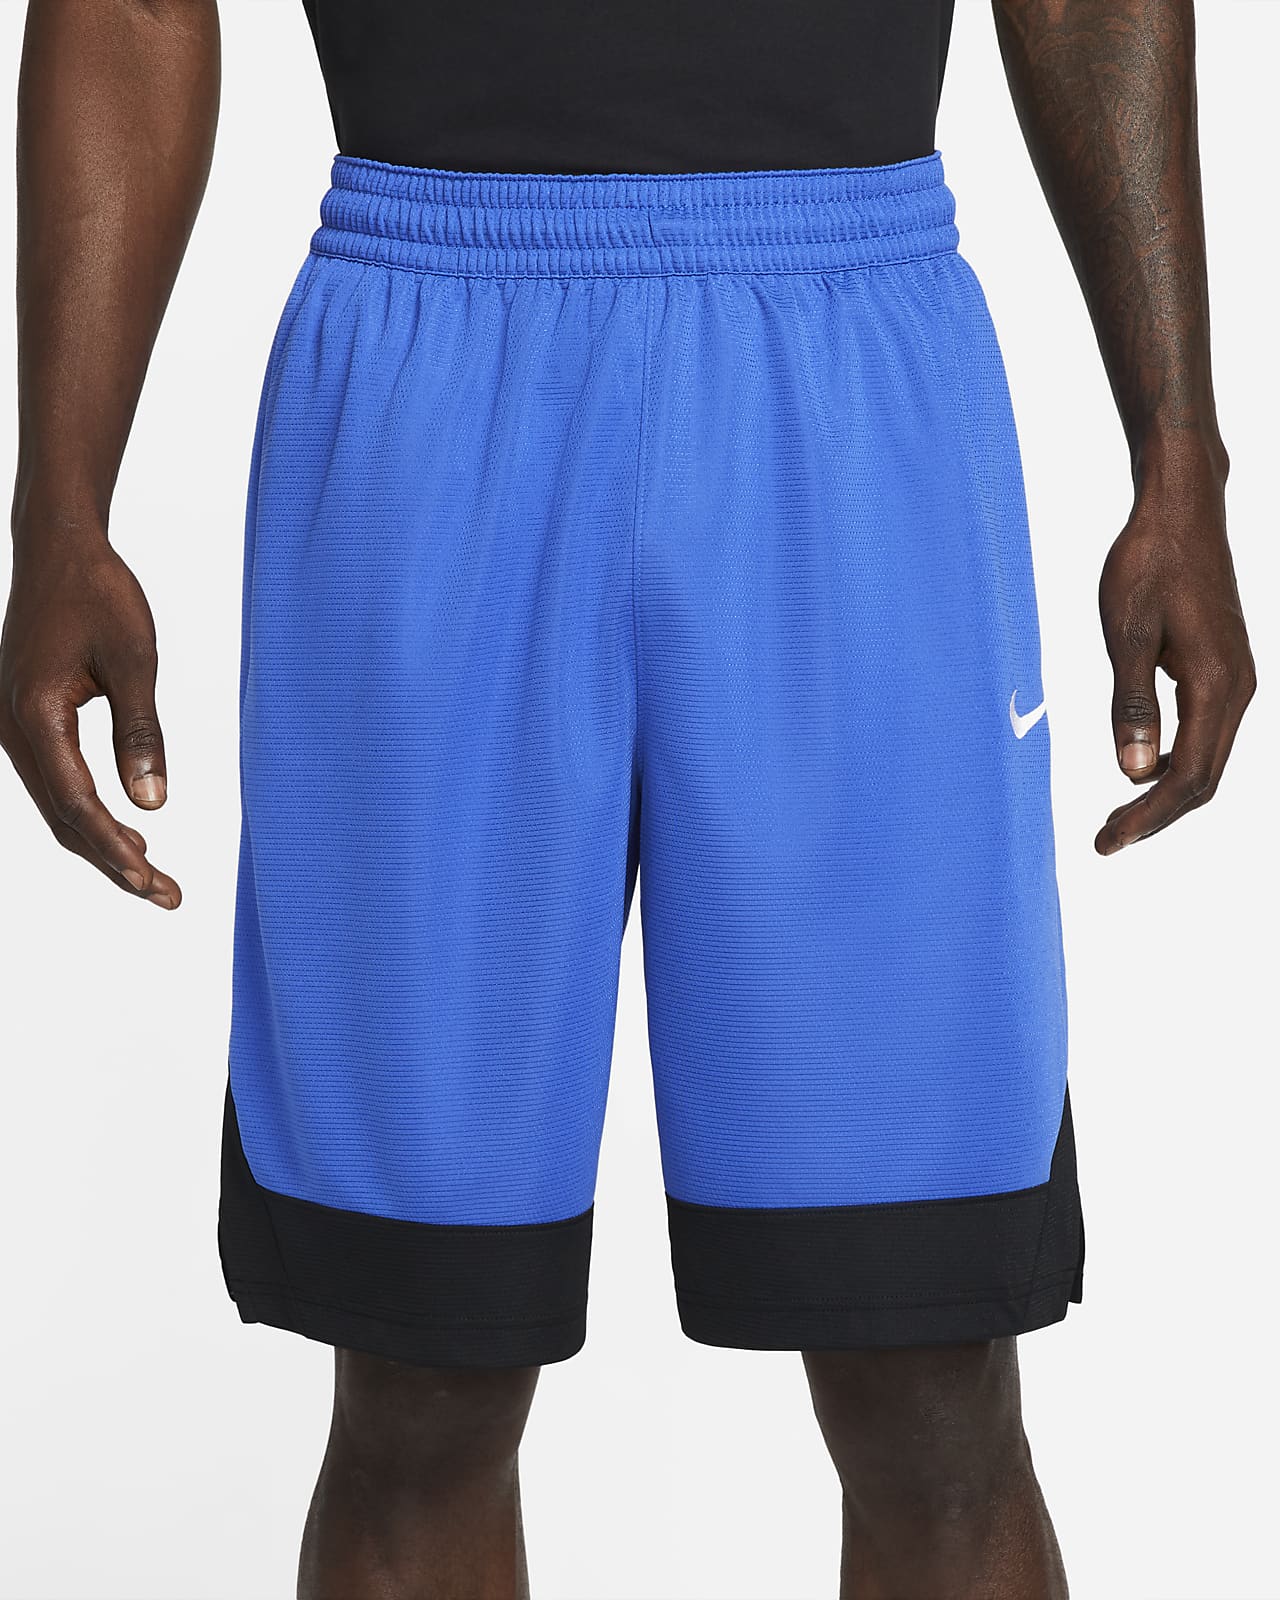 Nike Men's Dri-FIT Icon Basketball Shorts White/Black Medium at   Men's Clothing store